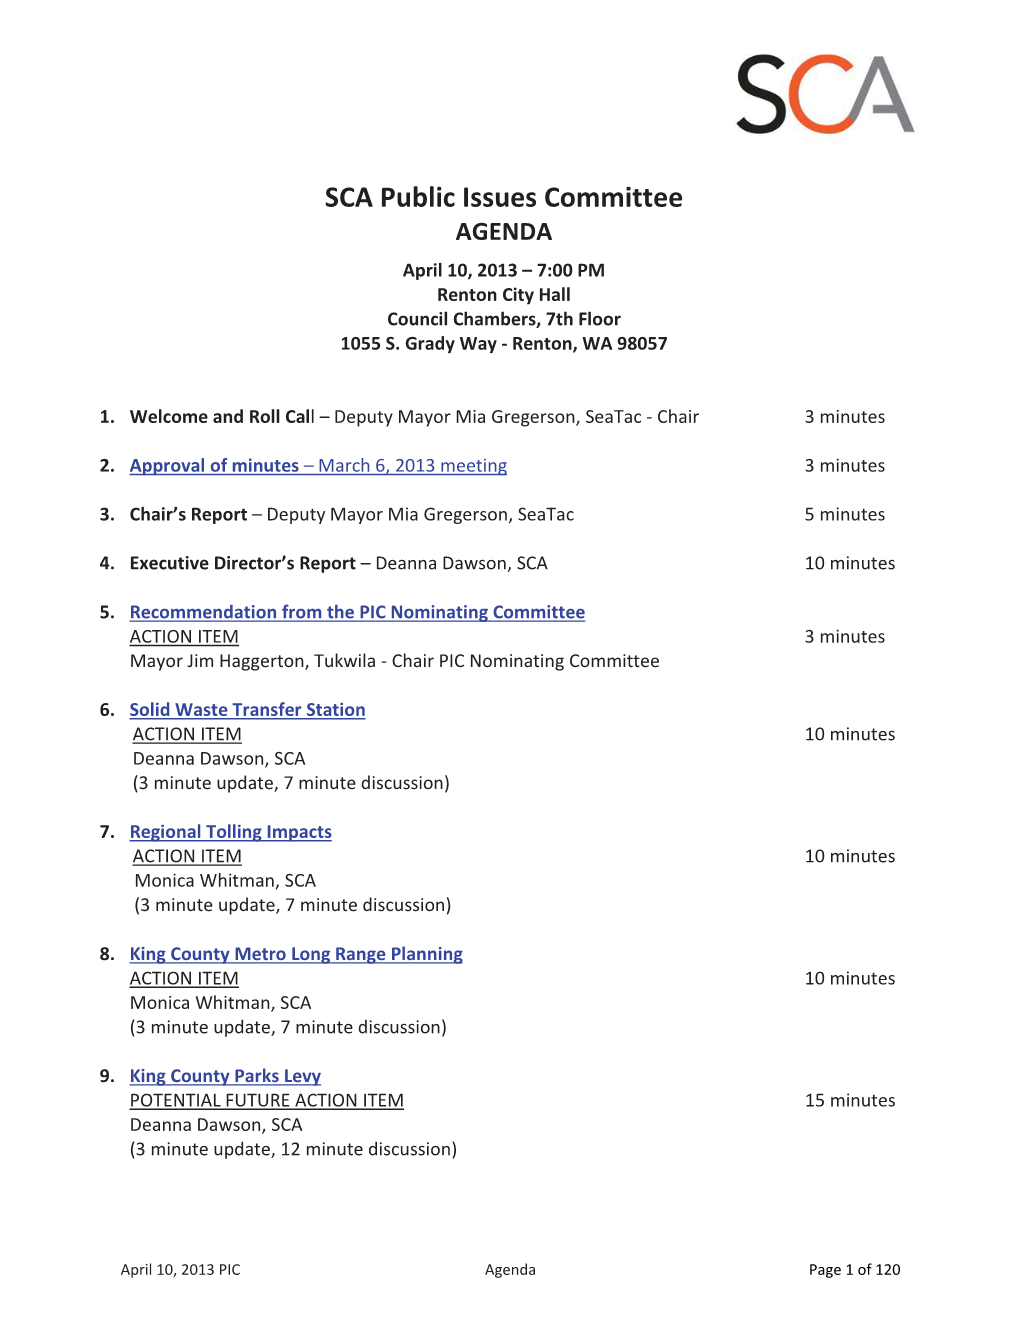 SCA Public Issues Committee AGENDA